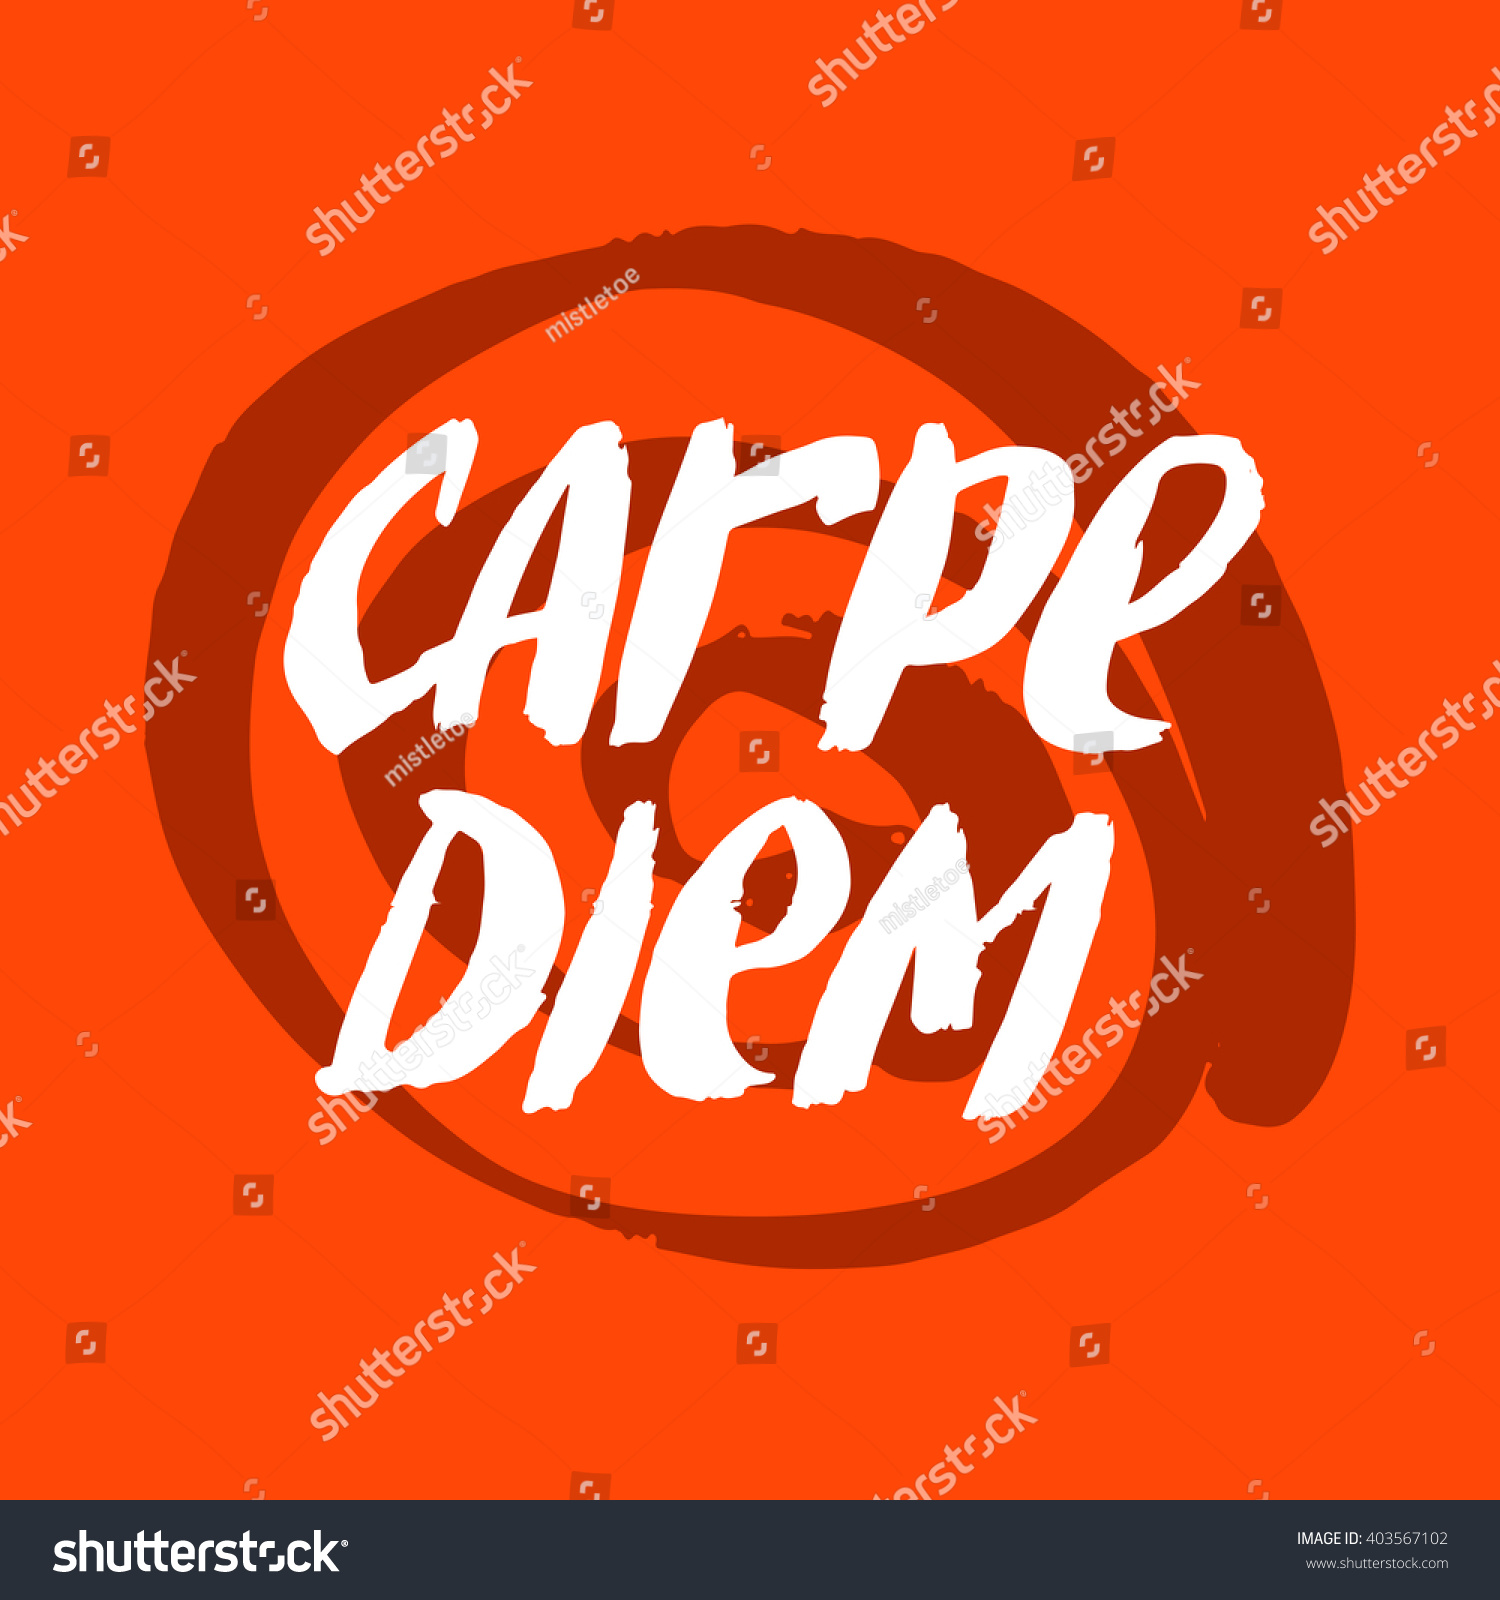 carpe diem full phrase